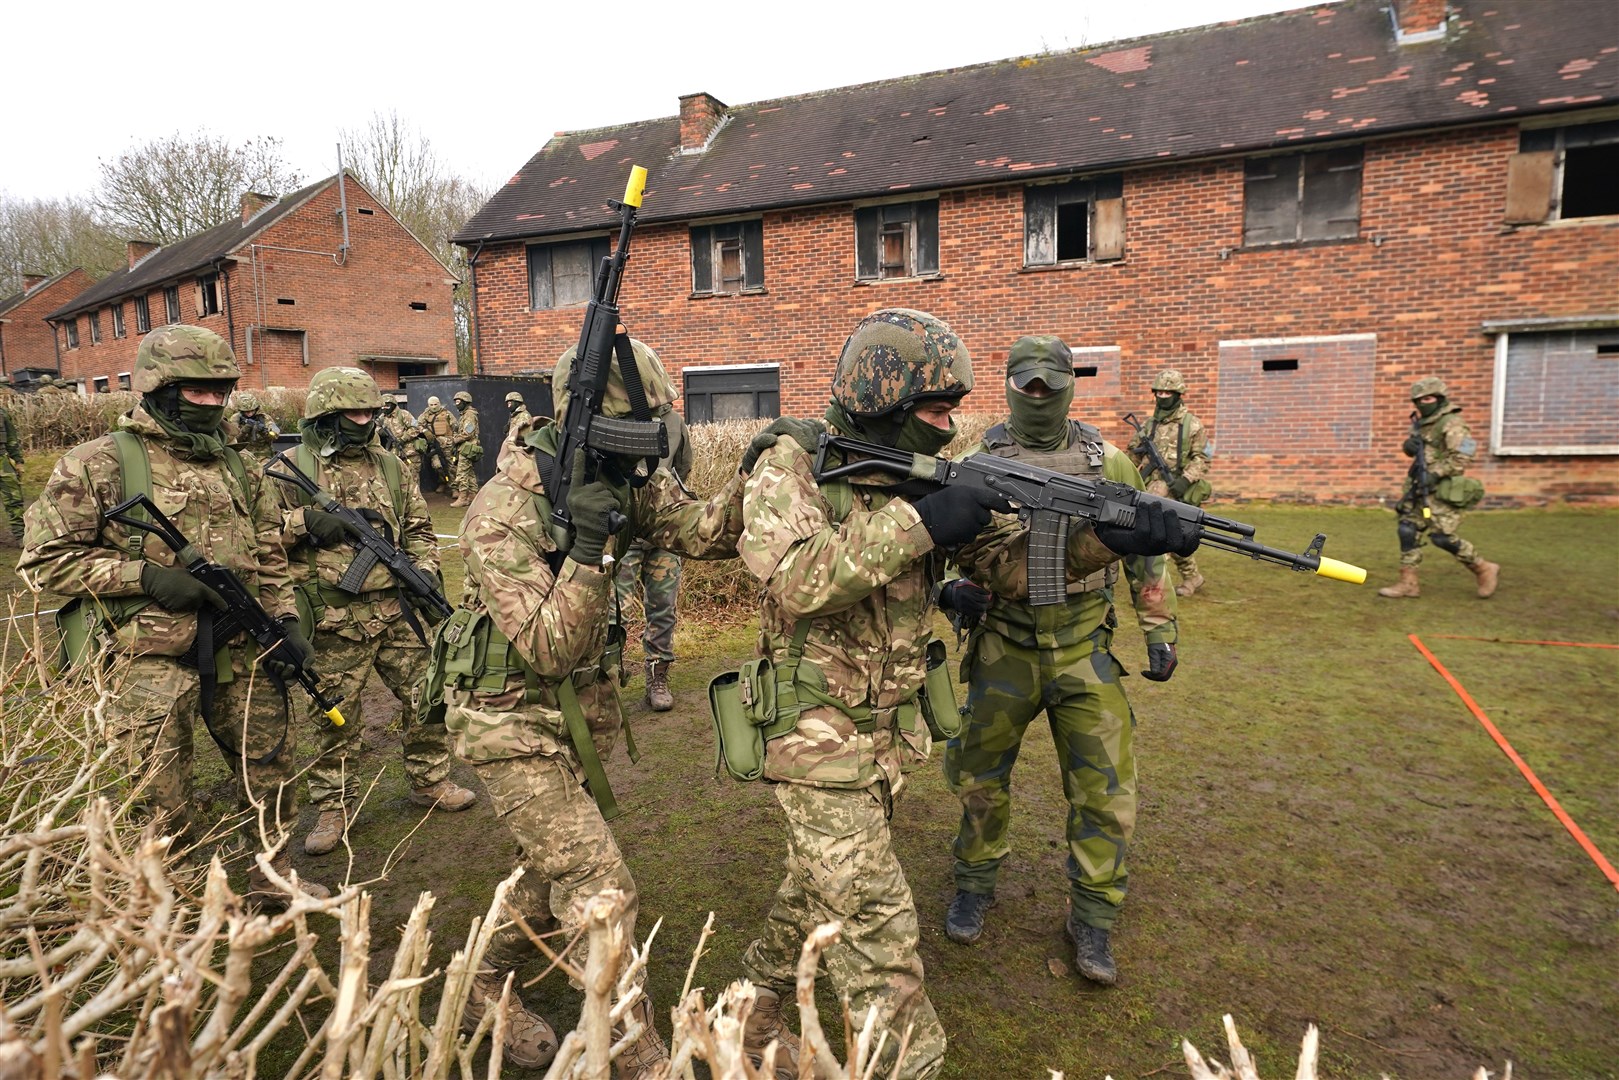 Swedish troops have trained the Ukrainians in urban warfare (Owen Humphreys/PA)